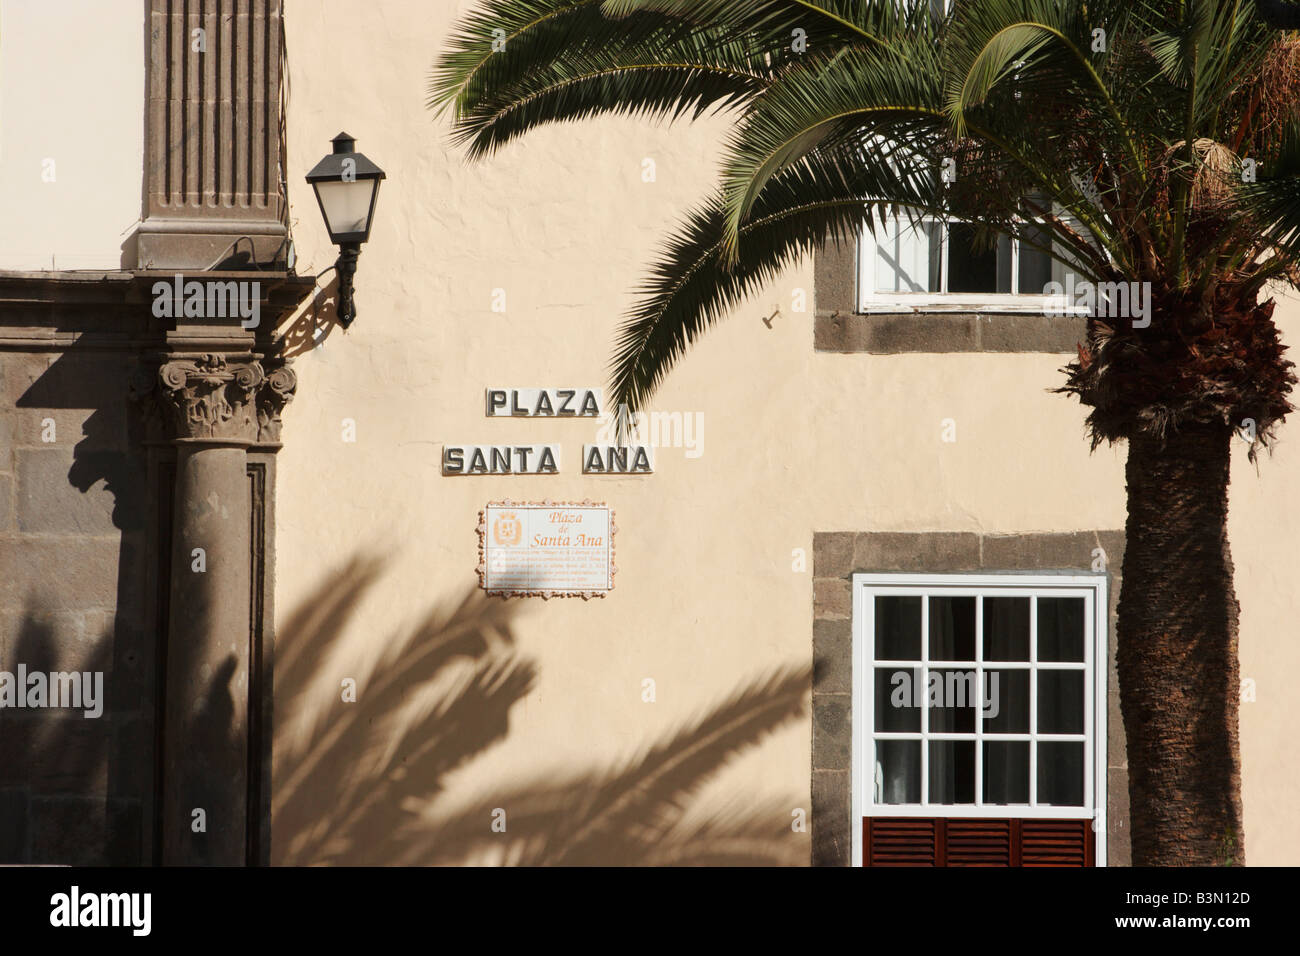 Plaza Santa Ana in Las Palmas on Gran Canaria in The Canary Islands Stock Photo